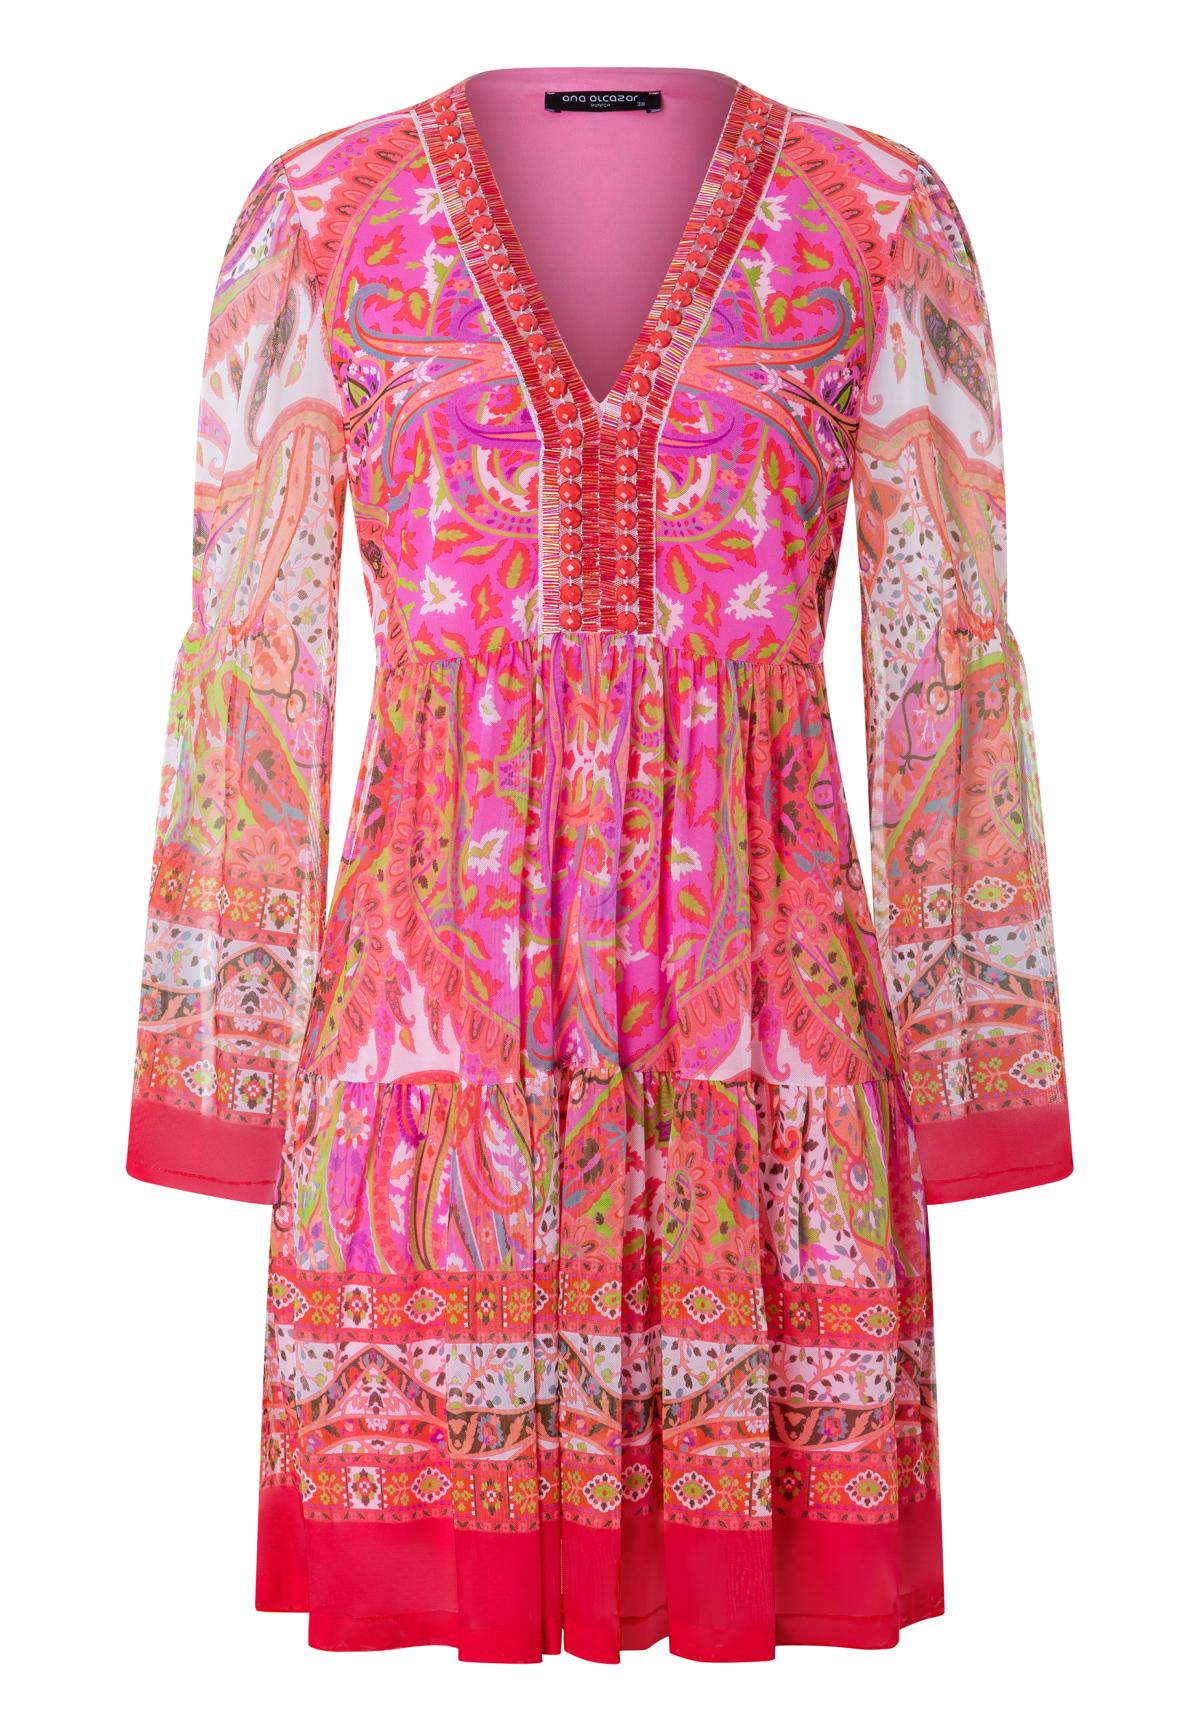 ANA ALCAZAR 040526-3499 dress deco Kleid Paisley-Muster original multicoloured